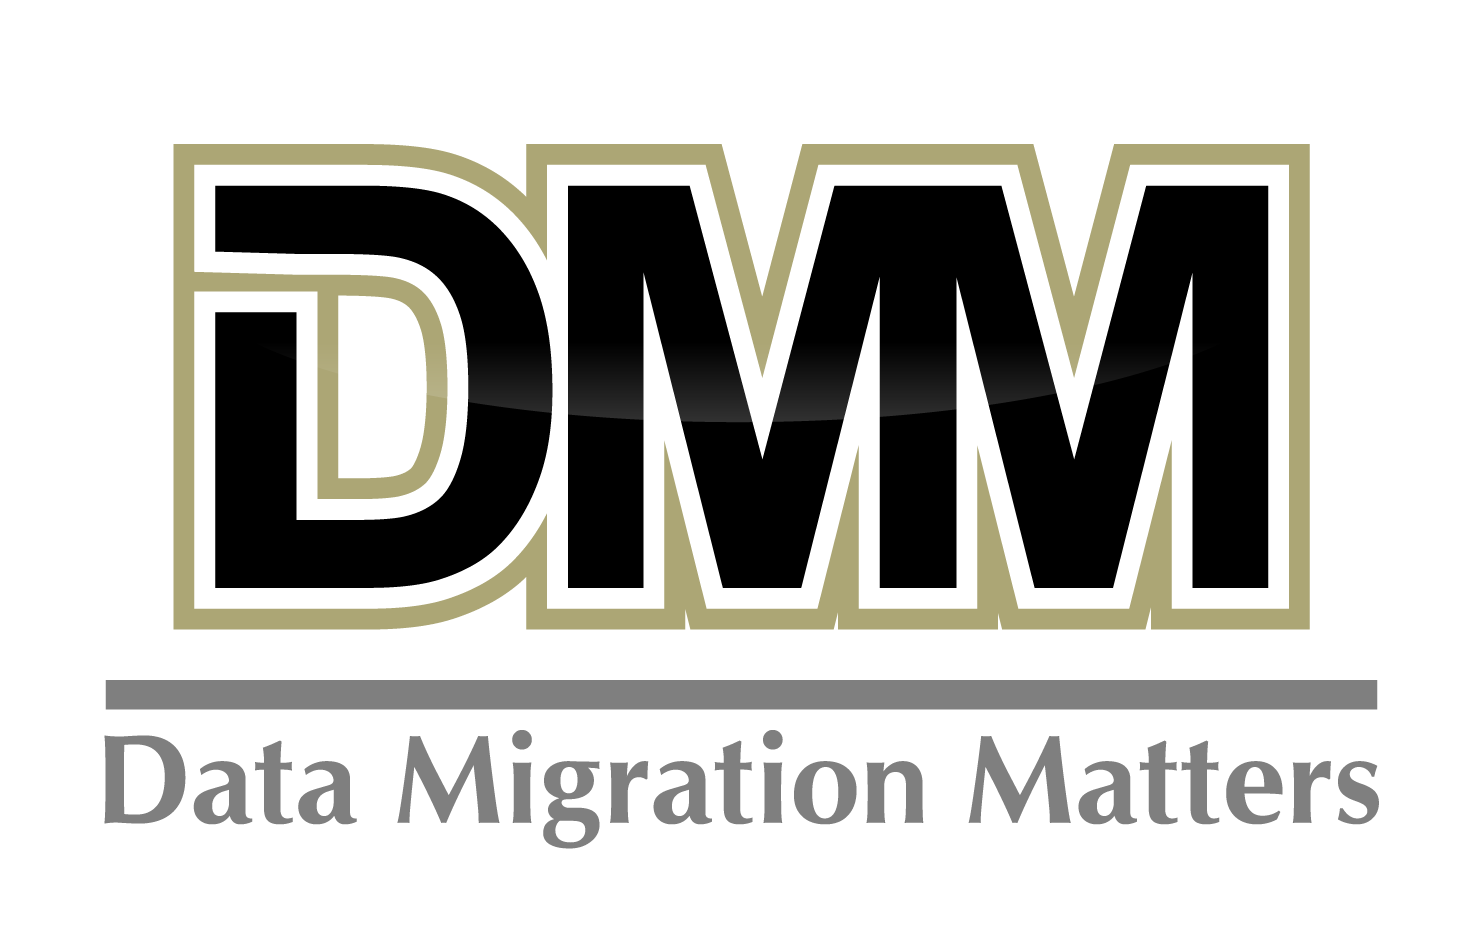 Data Migration Matters